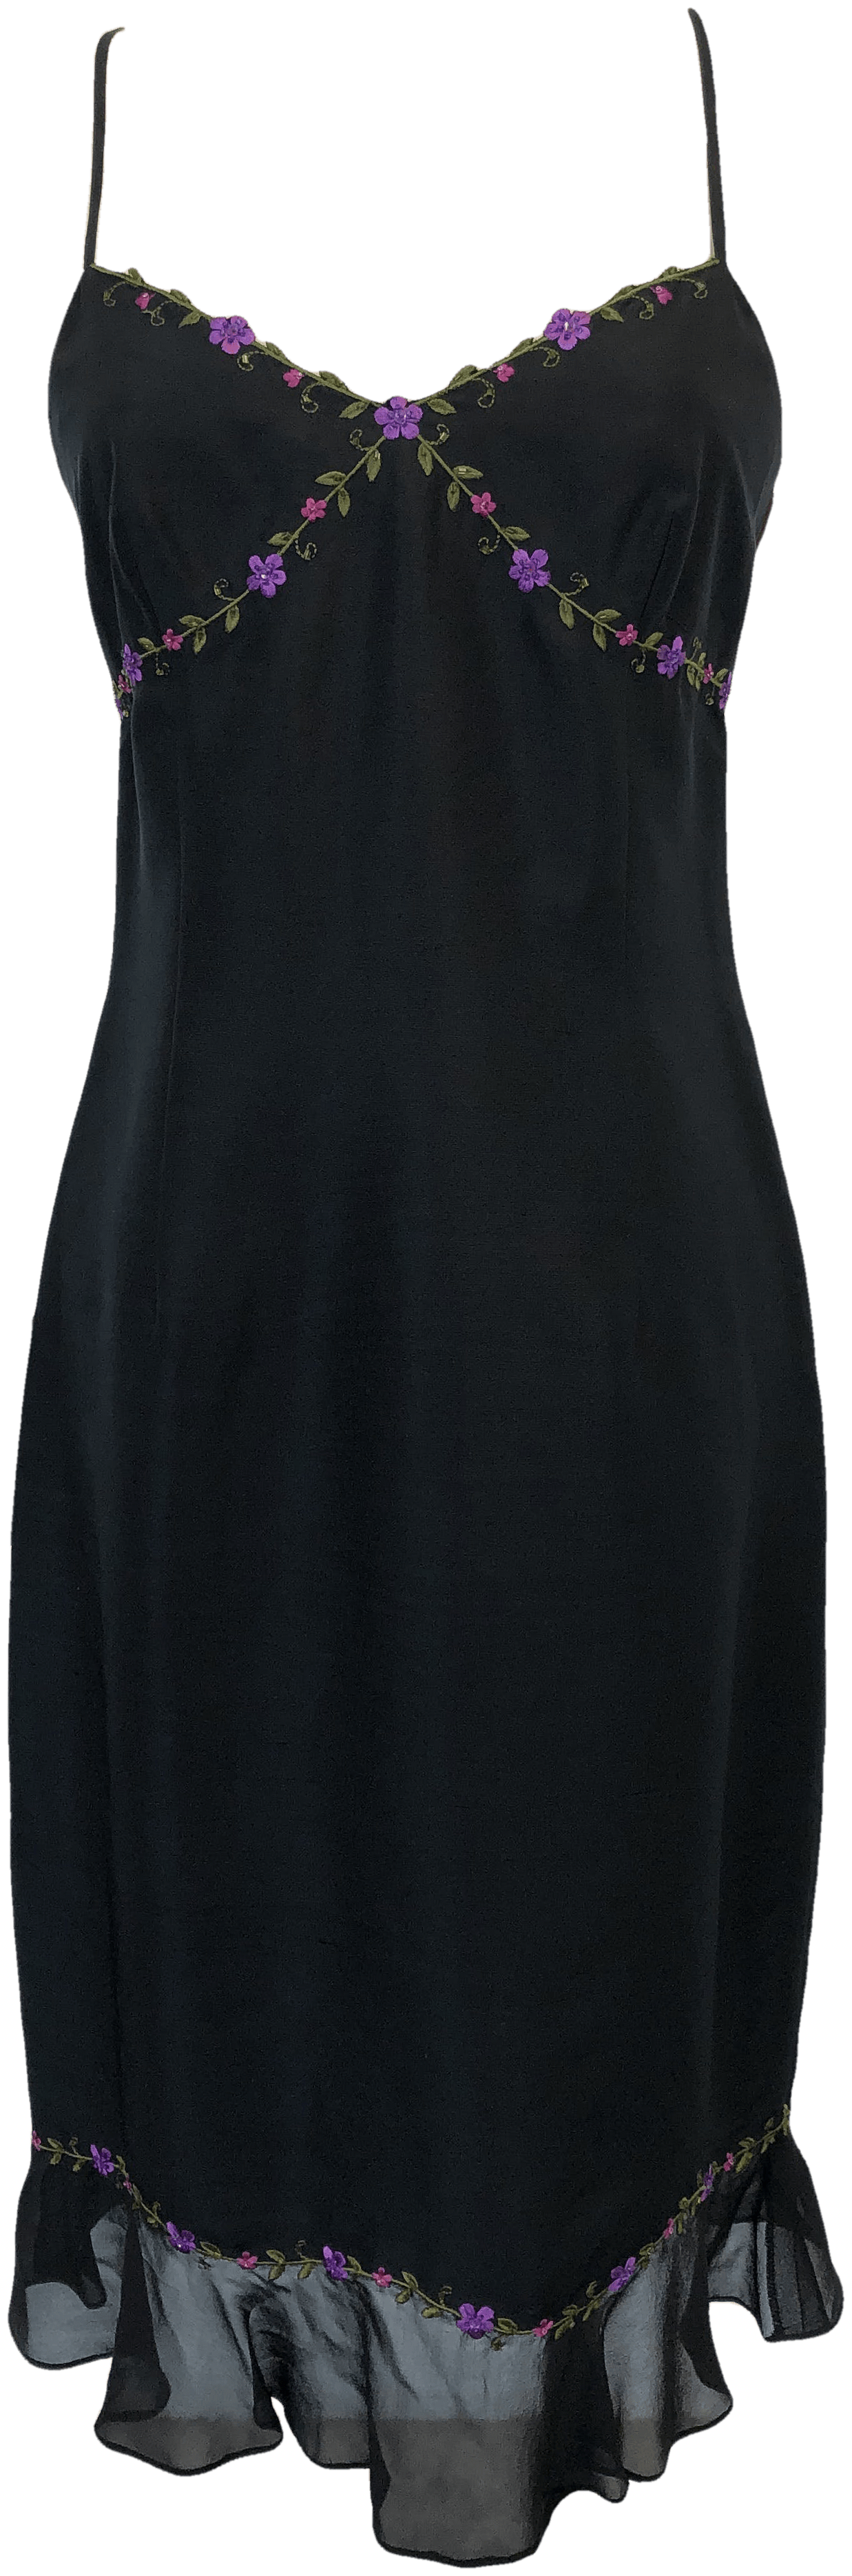 ann taylor black dress